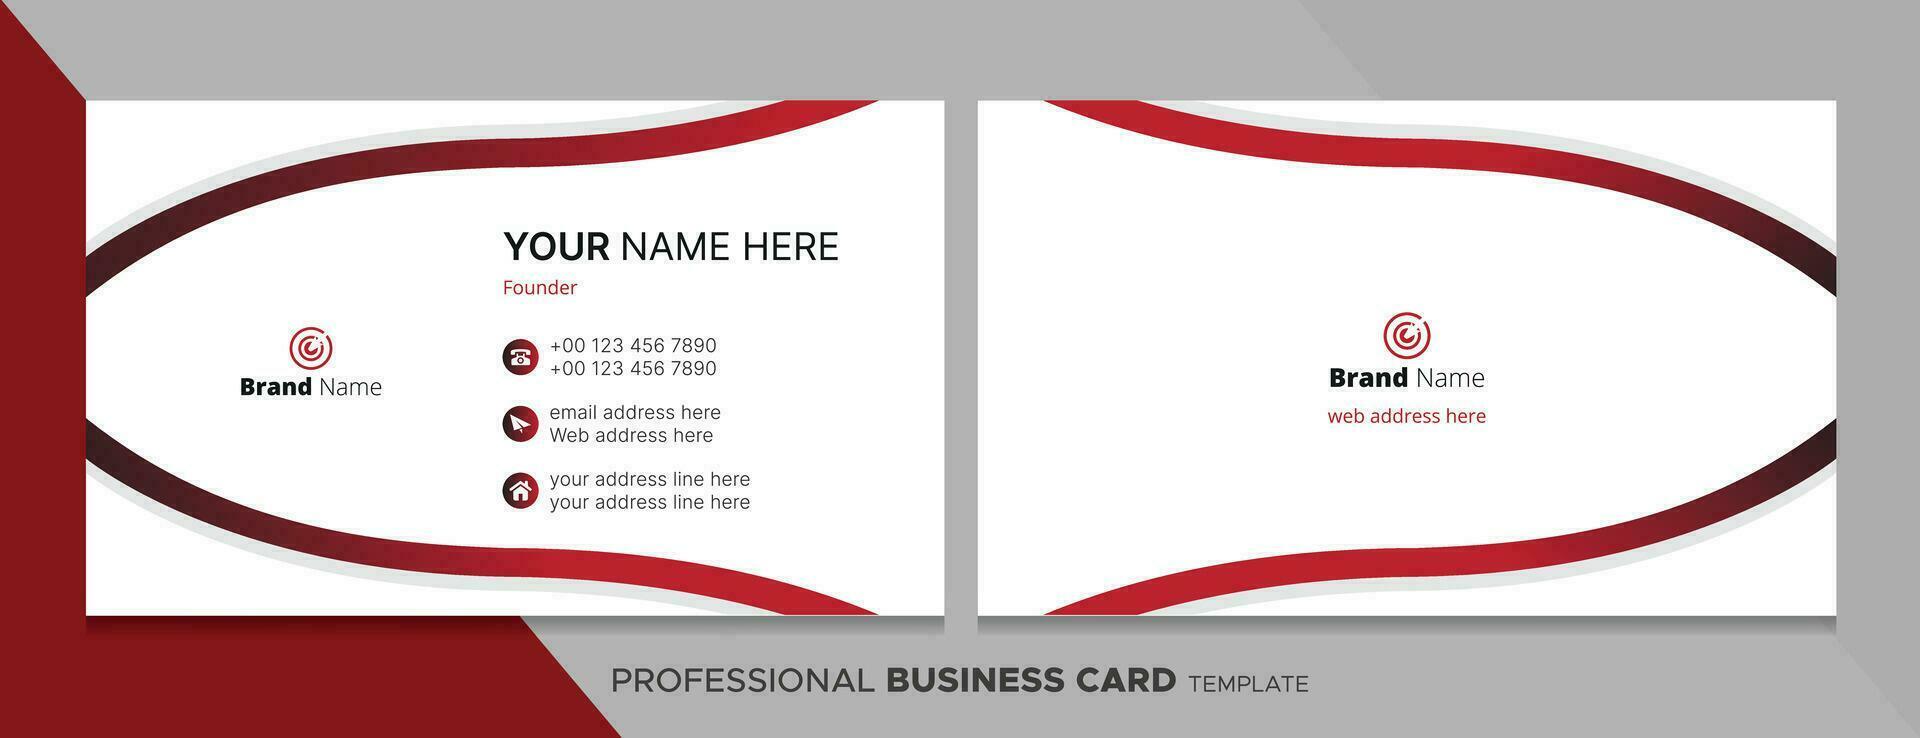 Modern Professional Business Card Template Design. vector